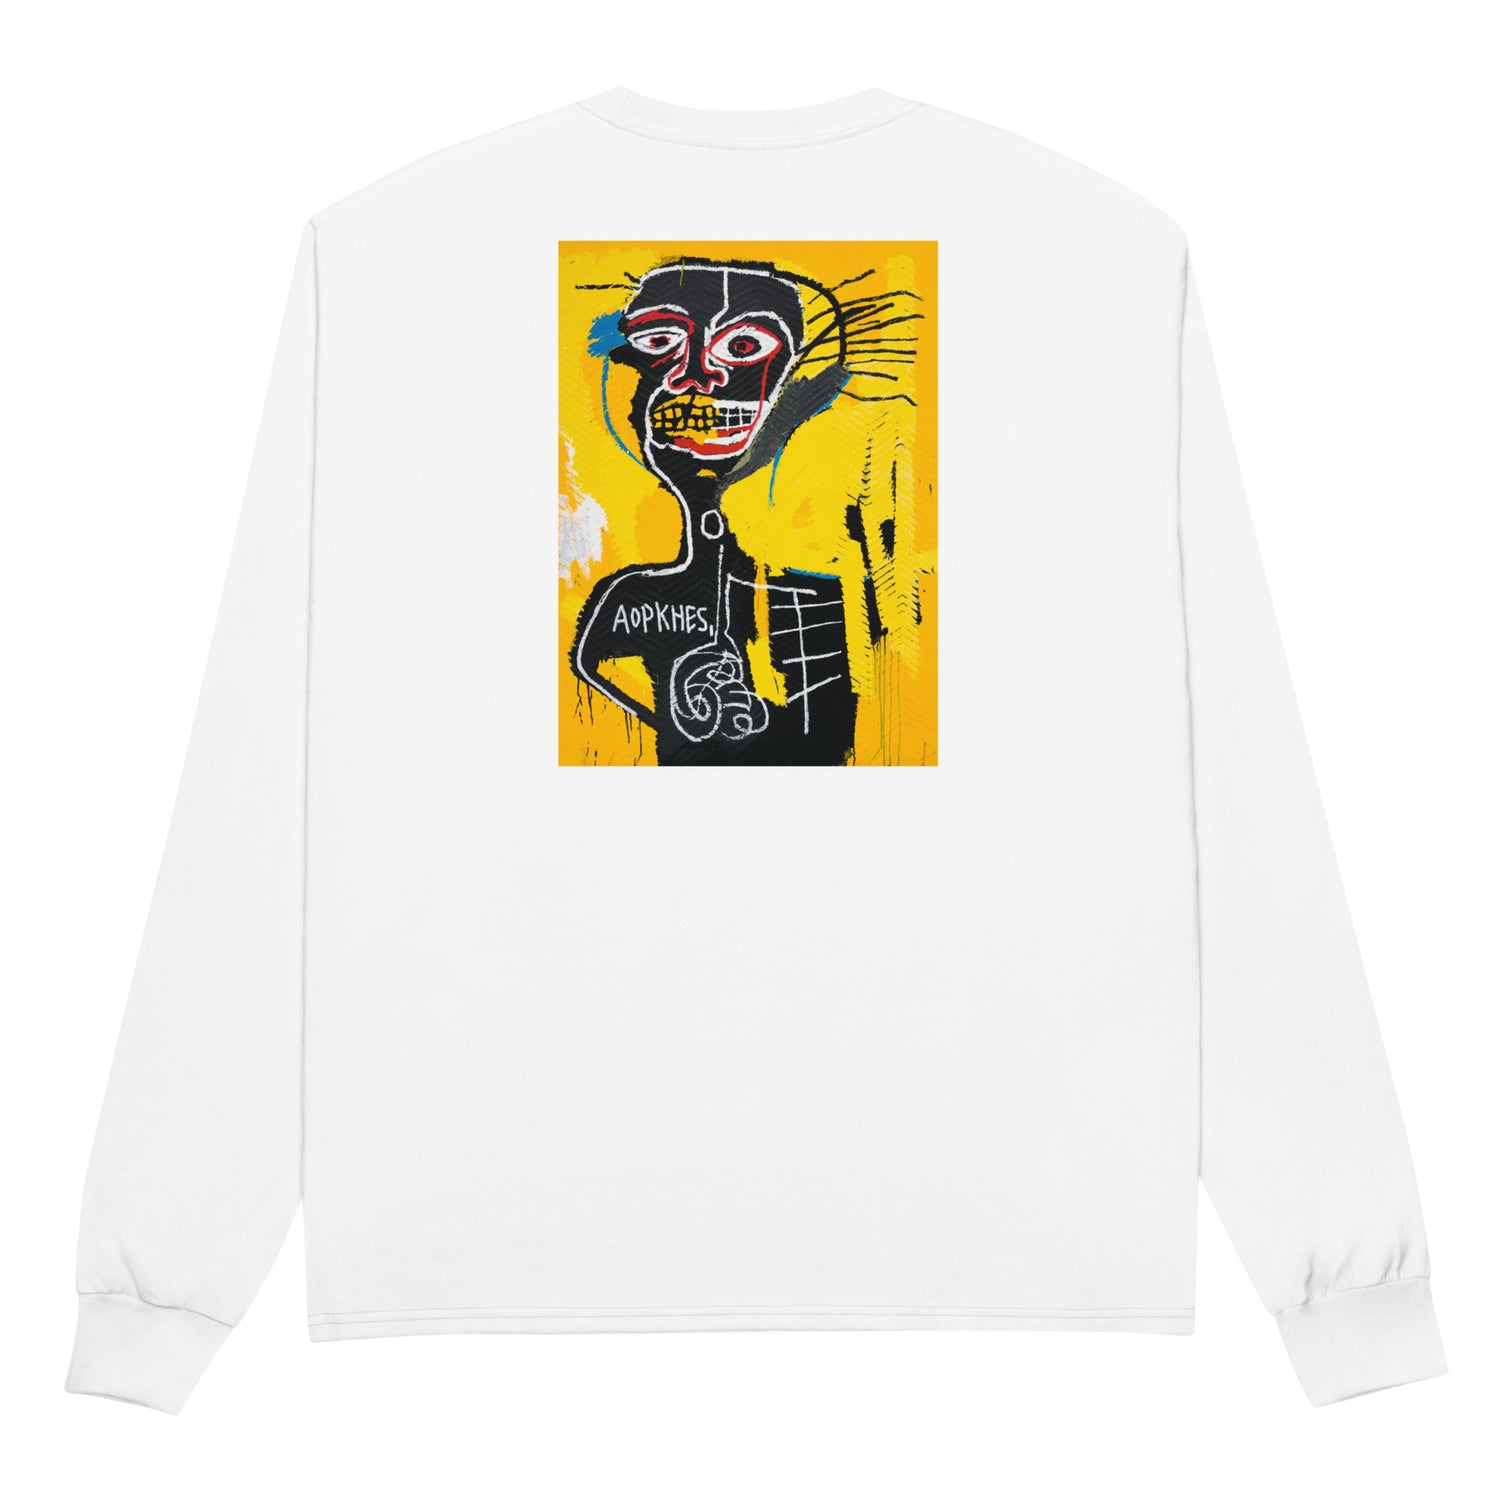 Jean-Michel Basquiat "Cabeza" Artwork Embroidered + Printed Premium Champion Streetwear Long Sleeve Shirt White